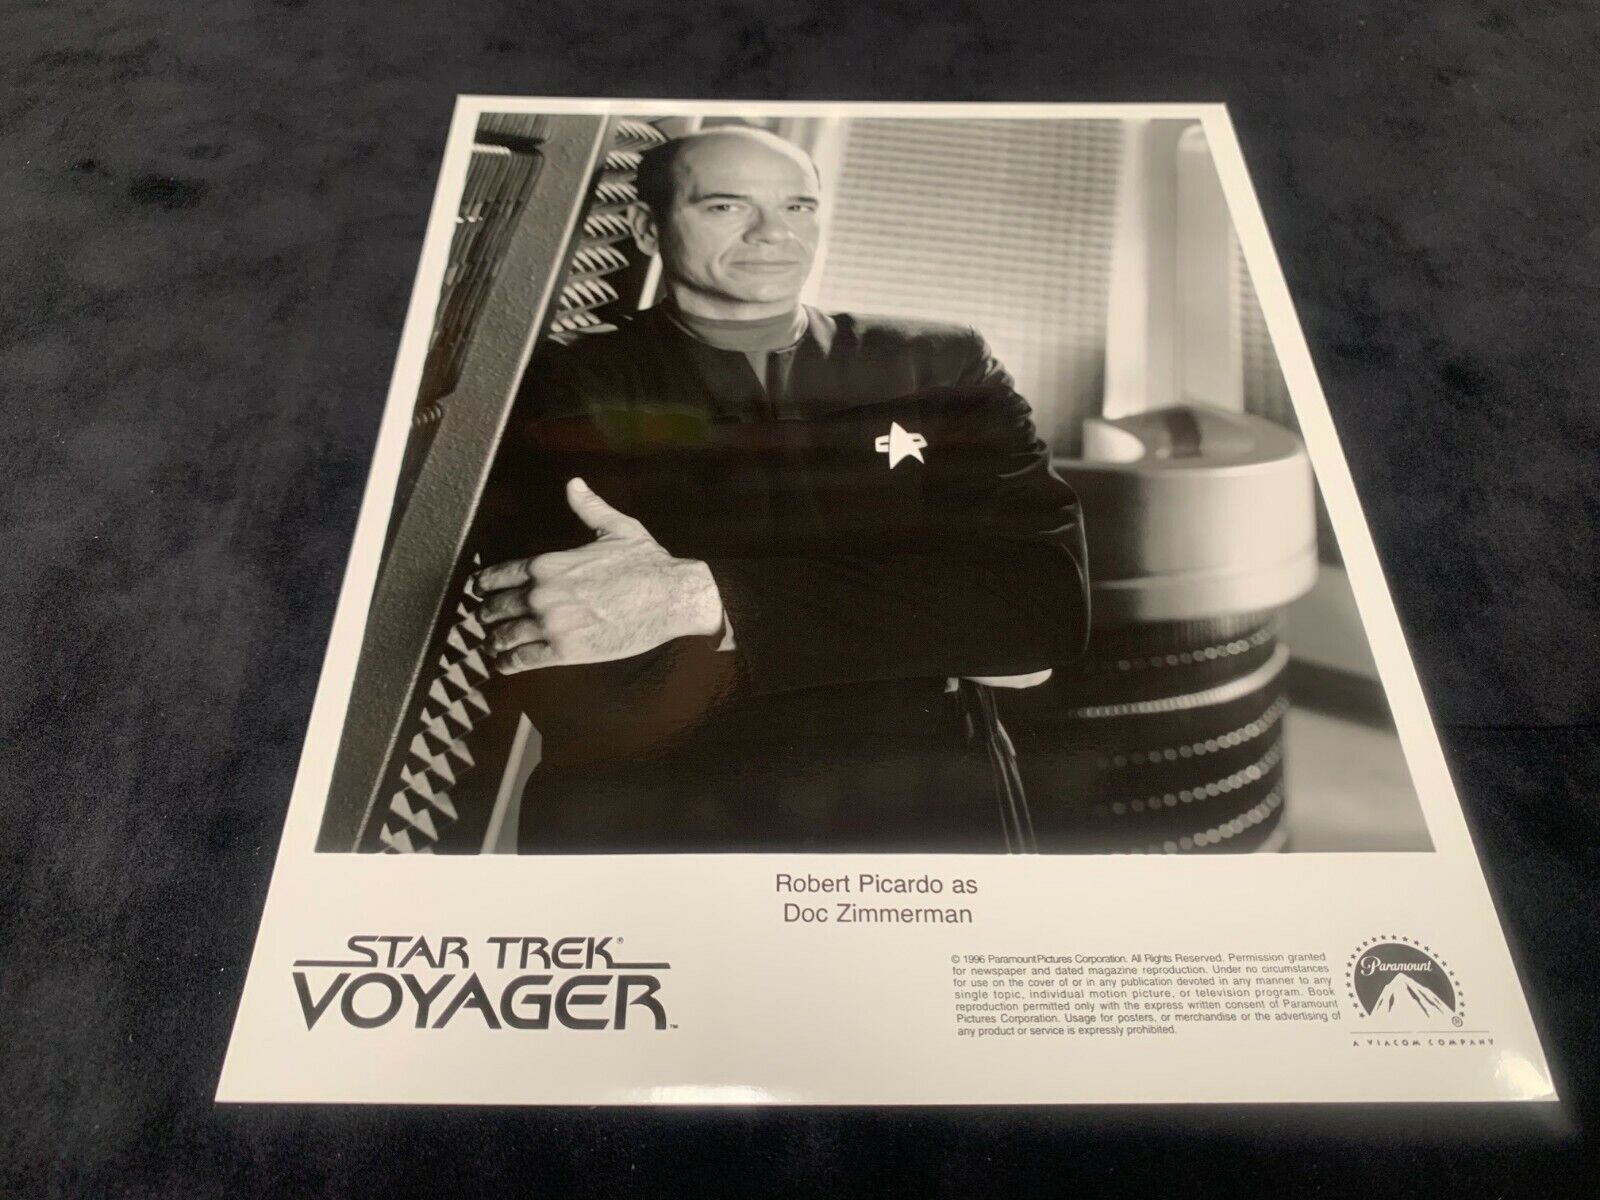 Star Trek Voyager 8x10 B&W Photo of Robert Picardo in Excellent Condition